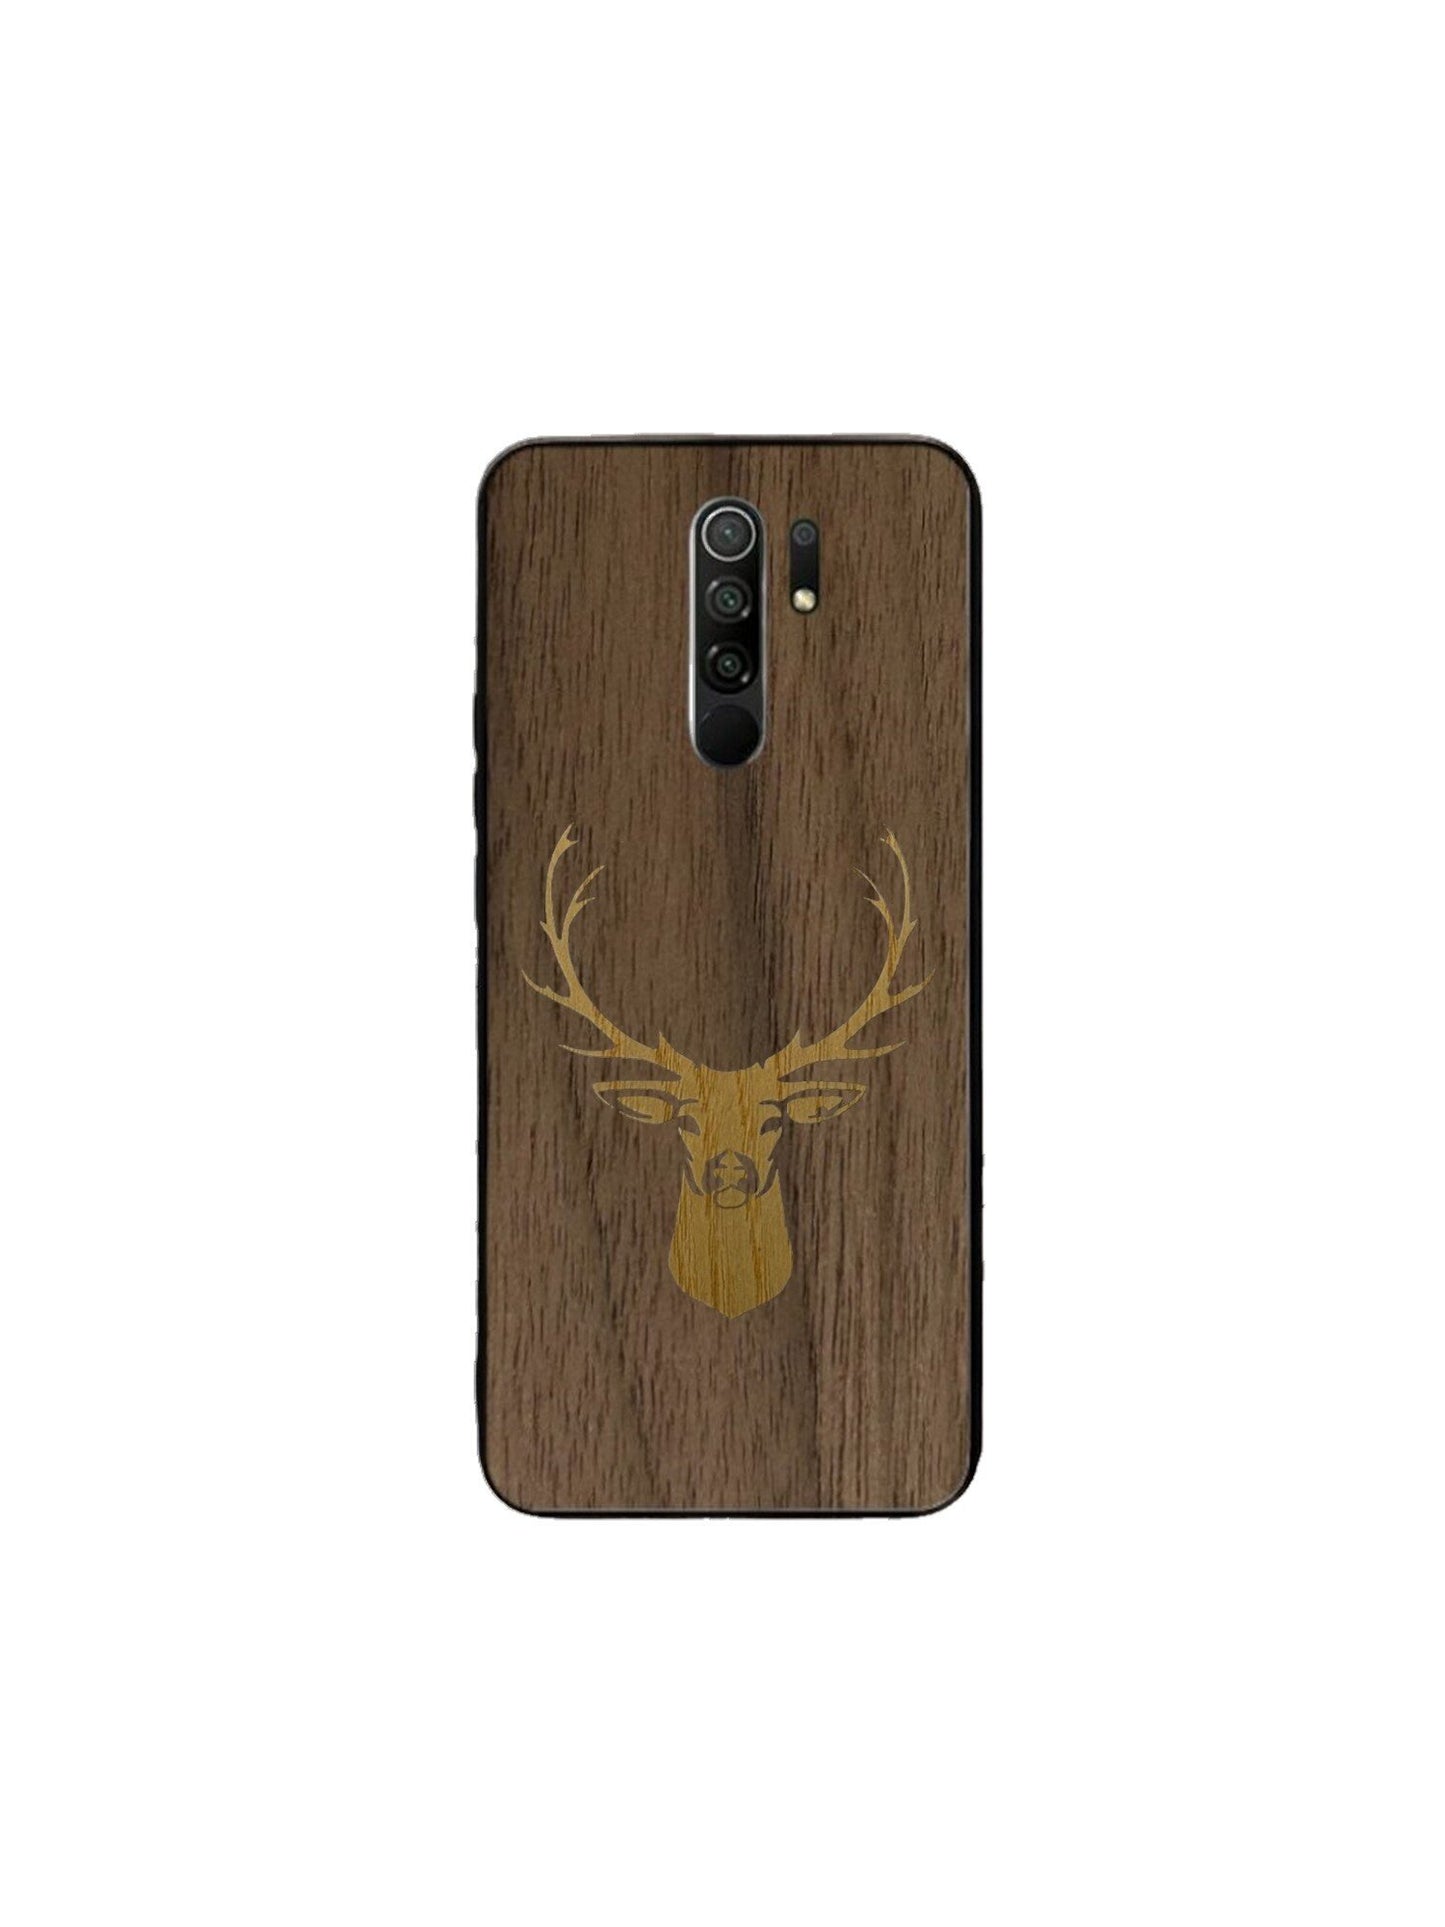 Xiaomi Redmi Case - Deer